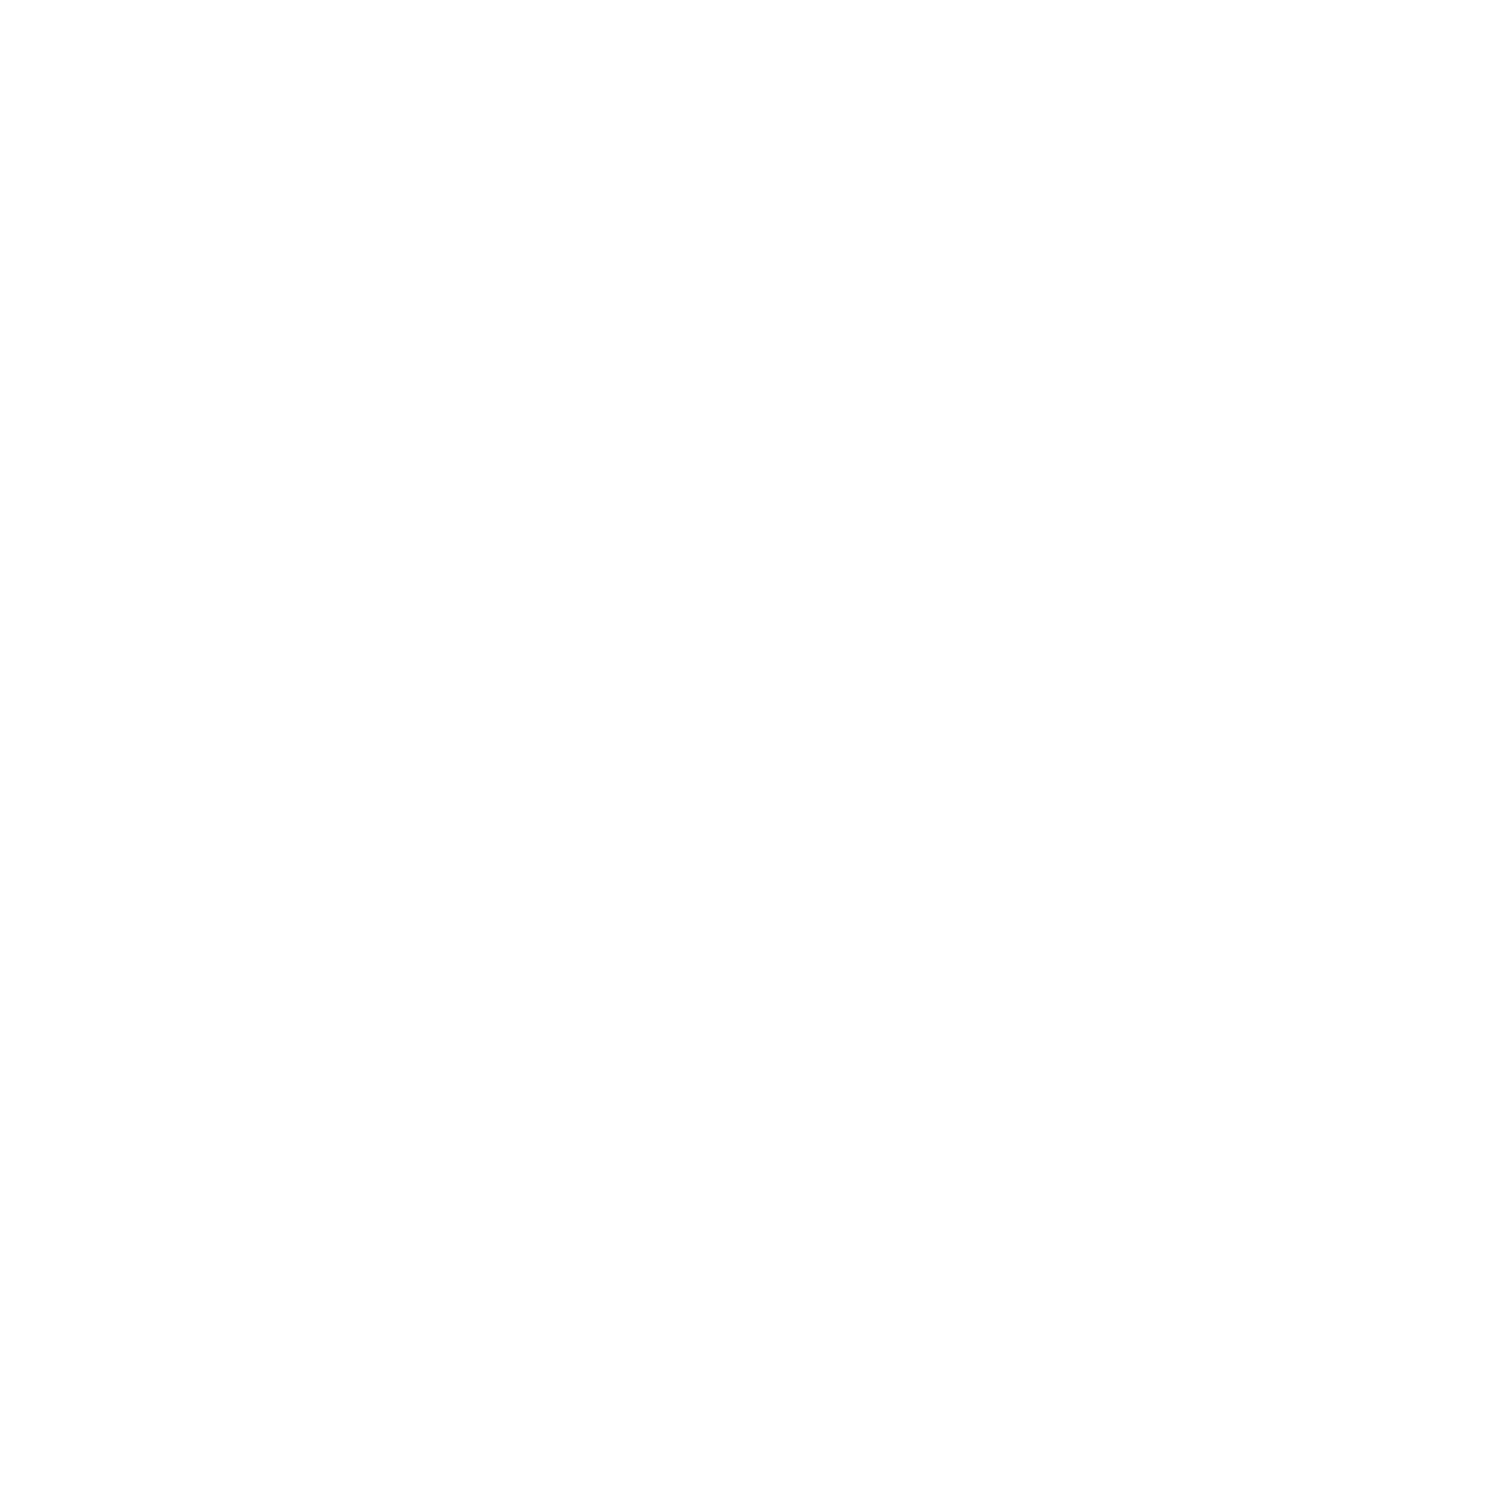 PRAY TELL